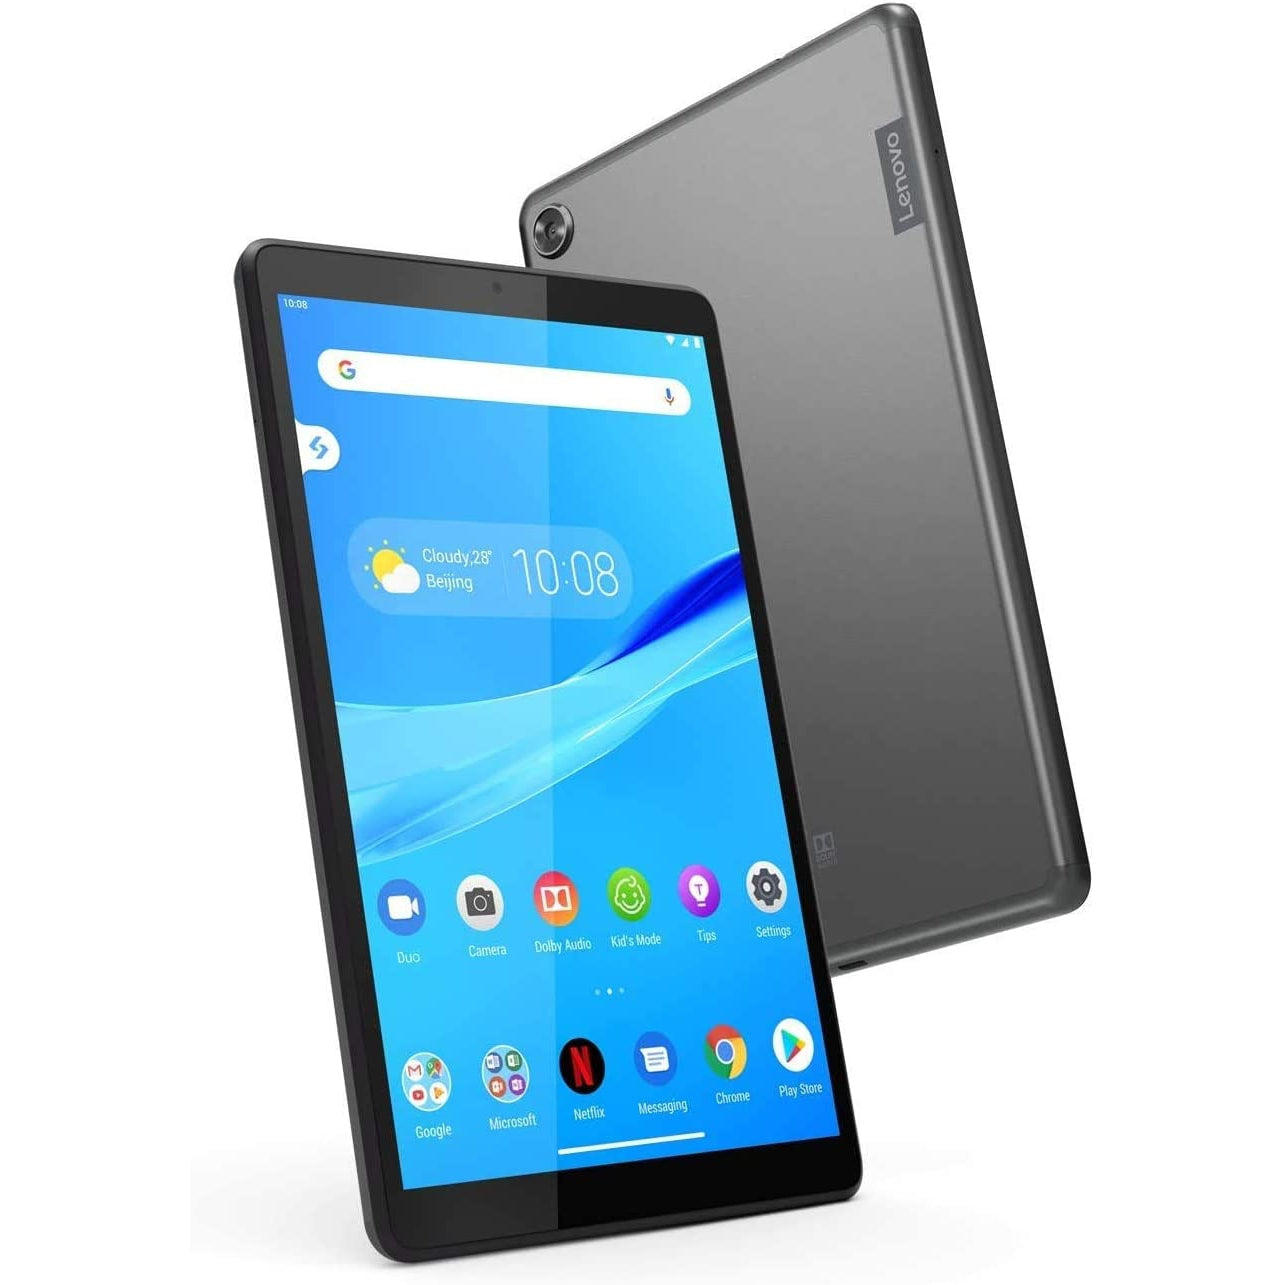 Lenovo M8 Smart Tab 8", 16GB Tablet - Grey (TB-8505X) - Refurbished Good